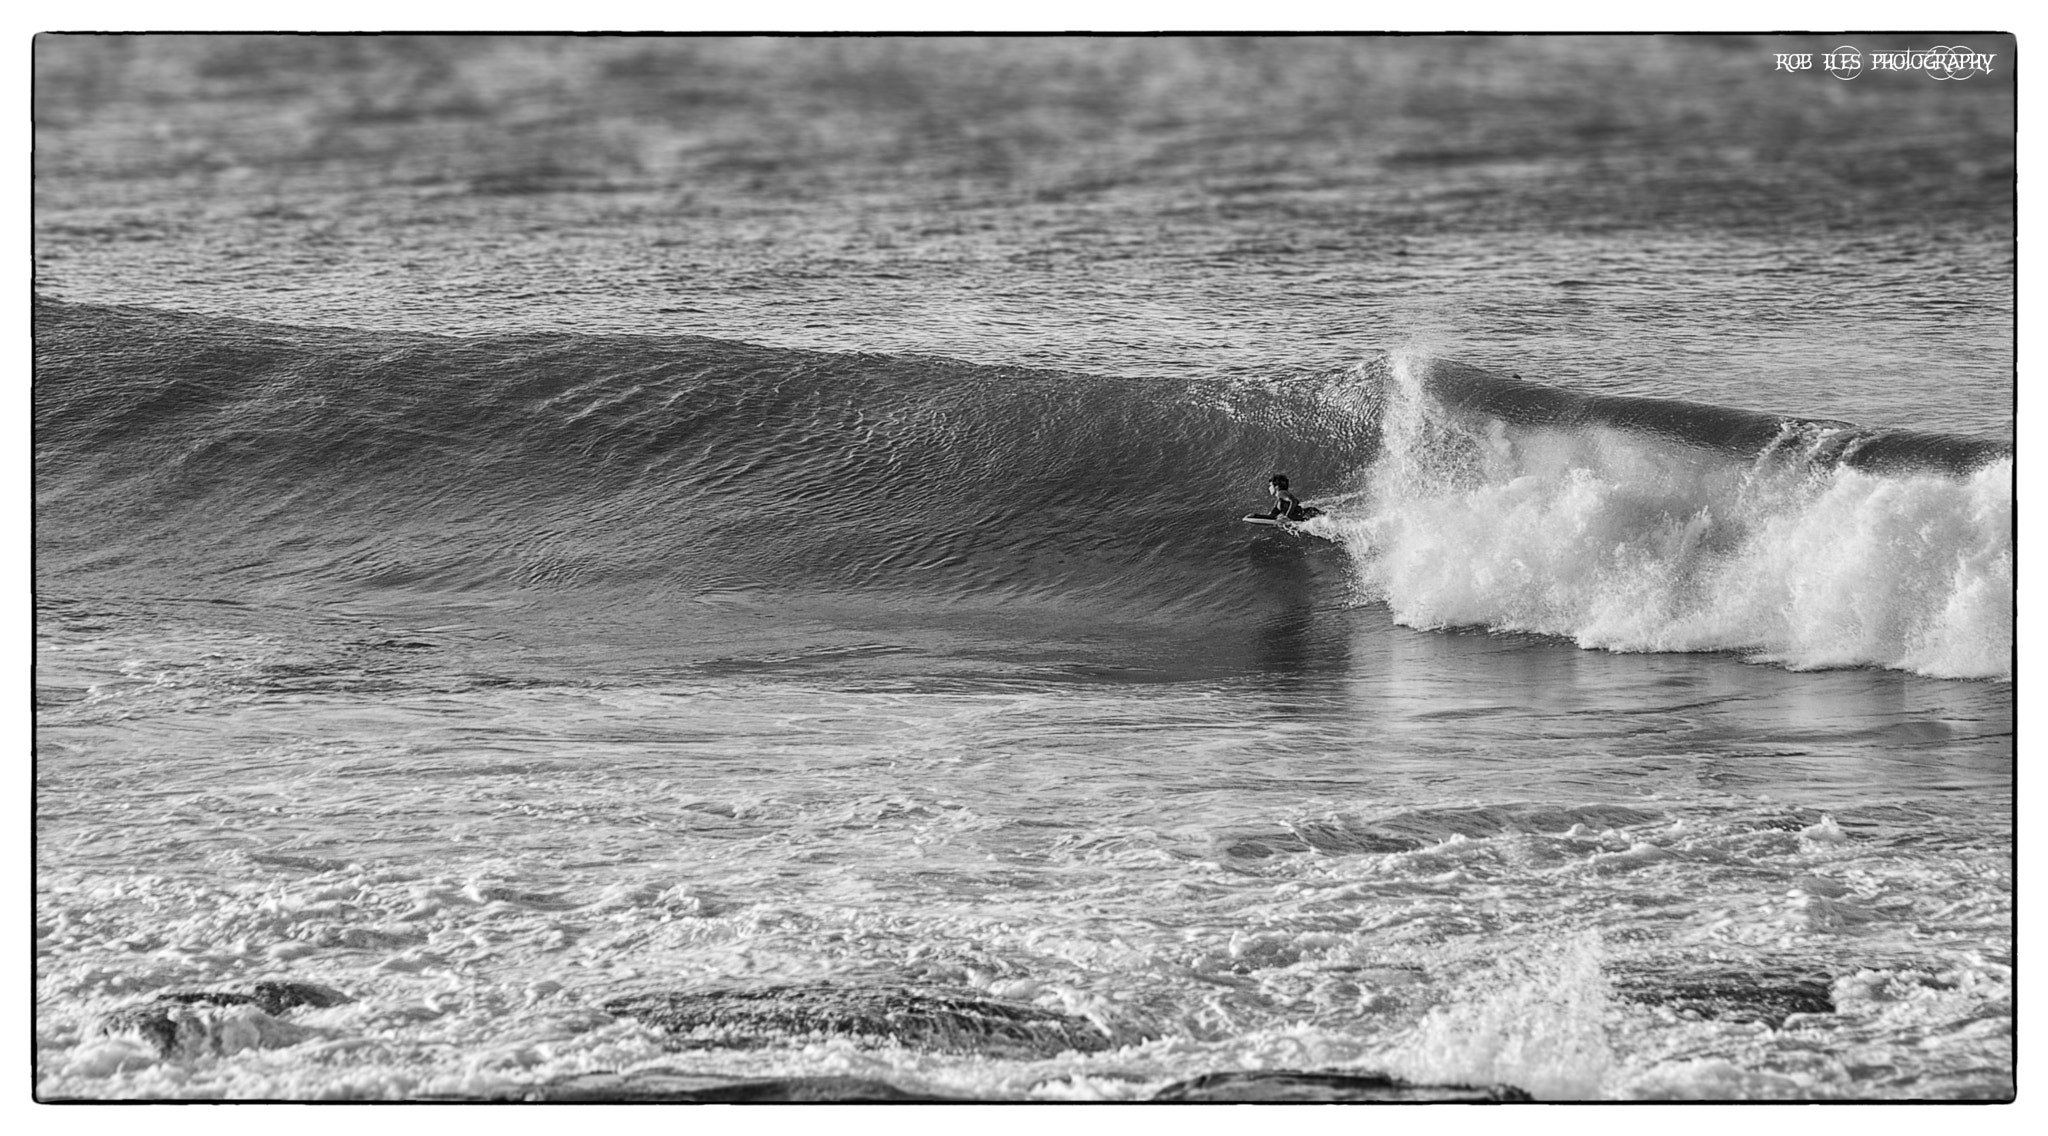 Pentax *ist DL + Sigma sample photo. Surfer photography